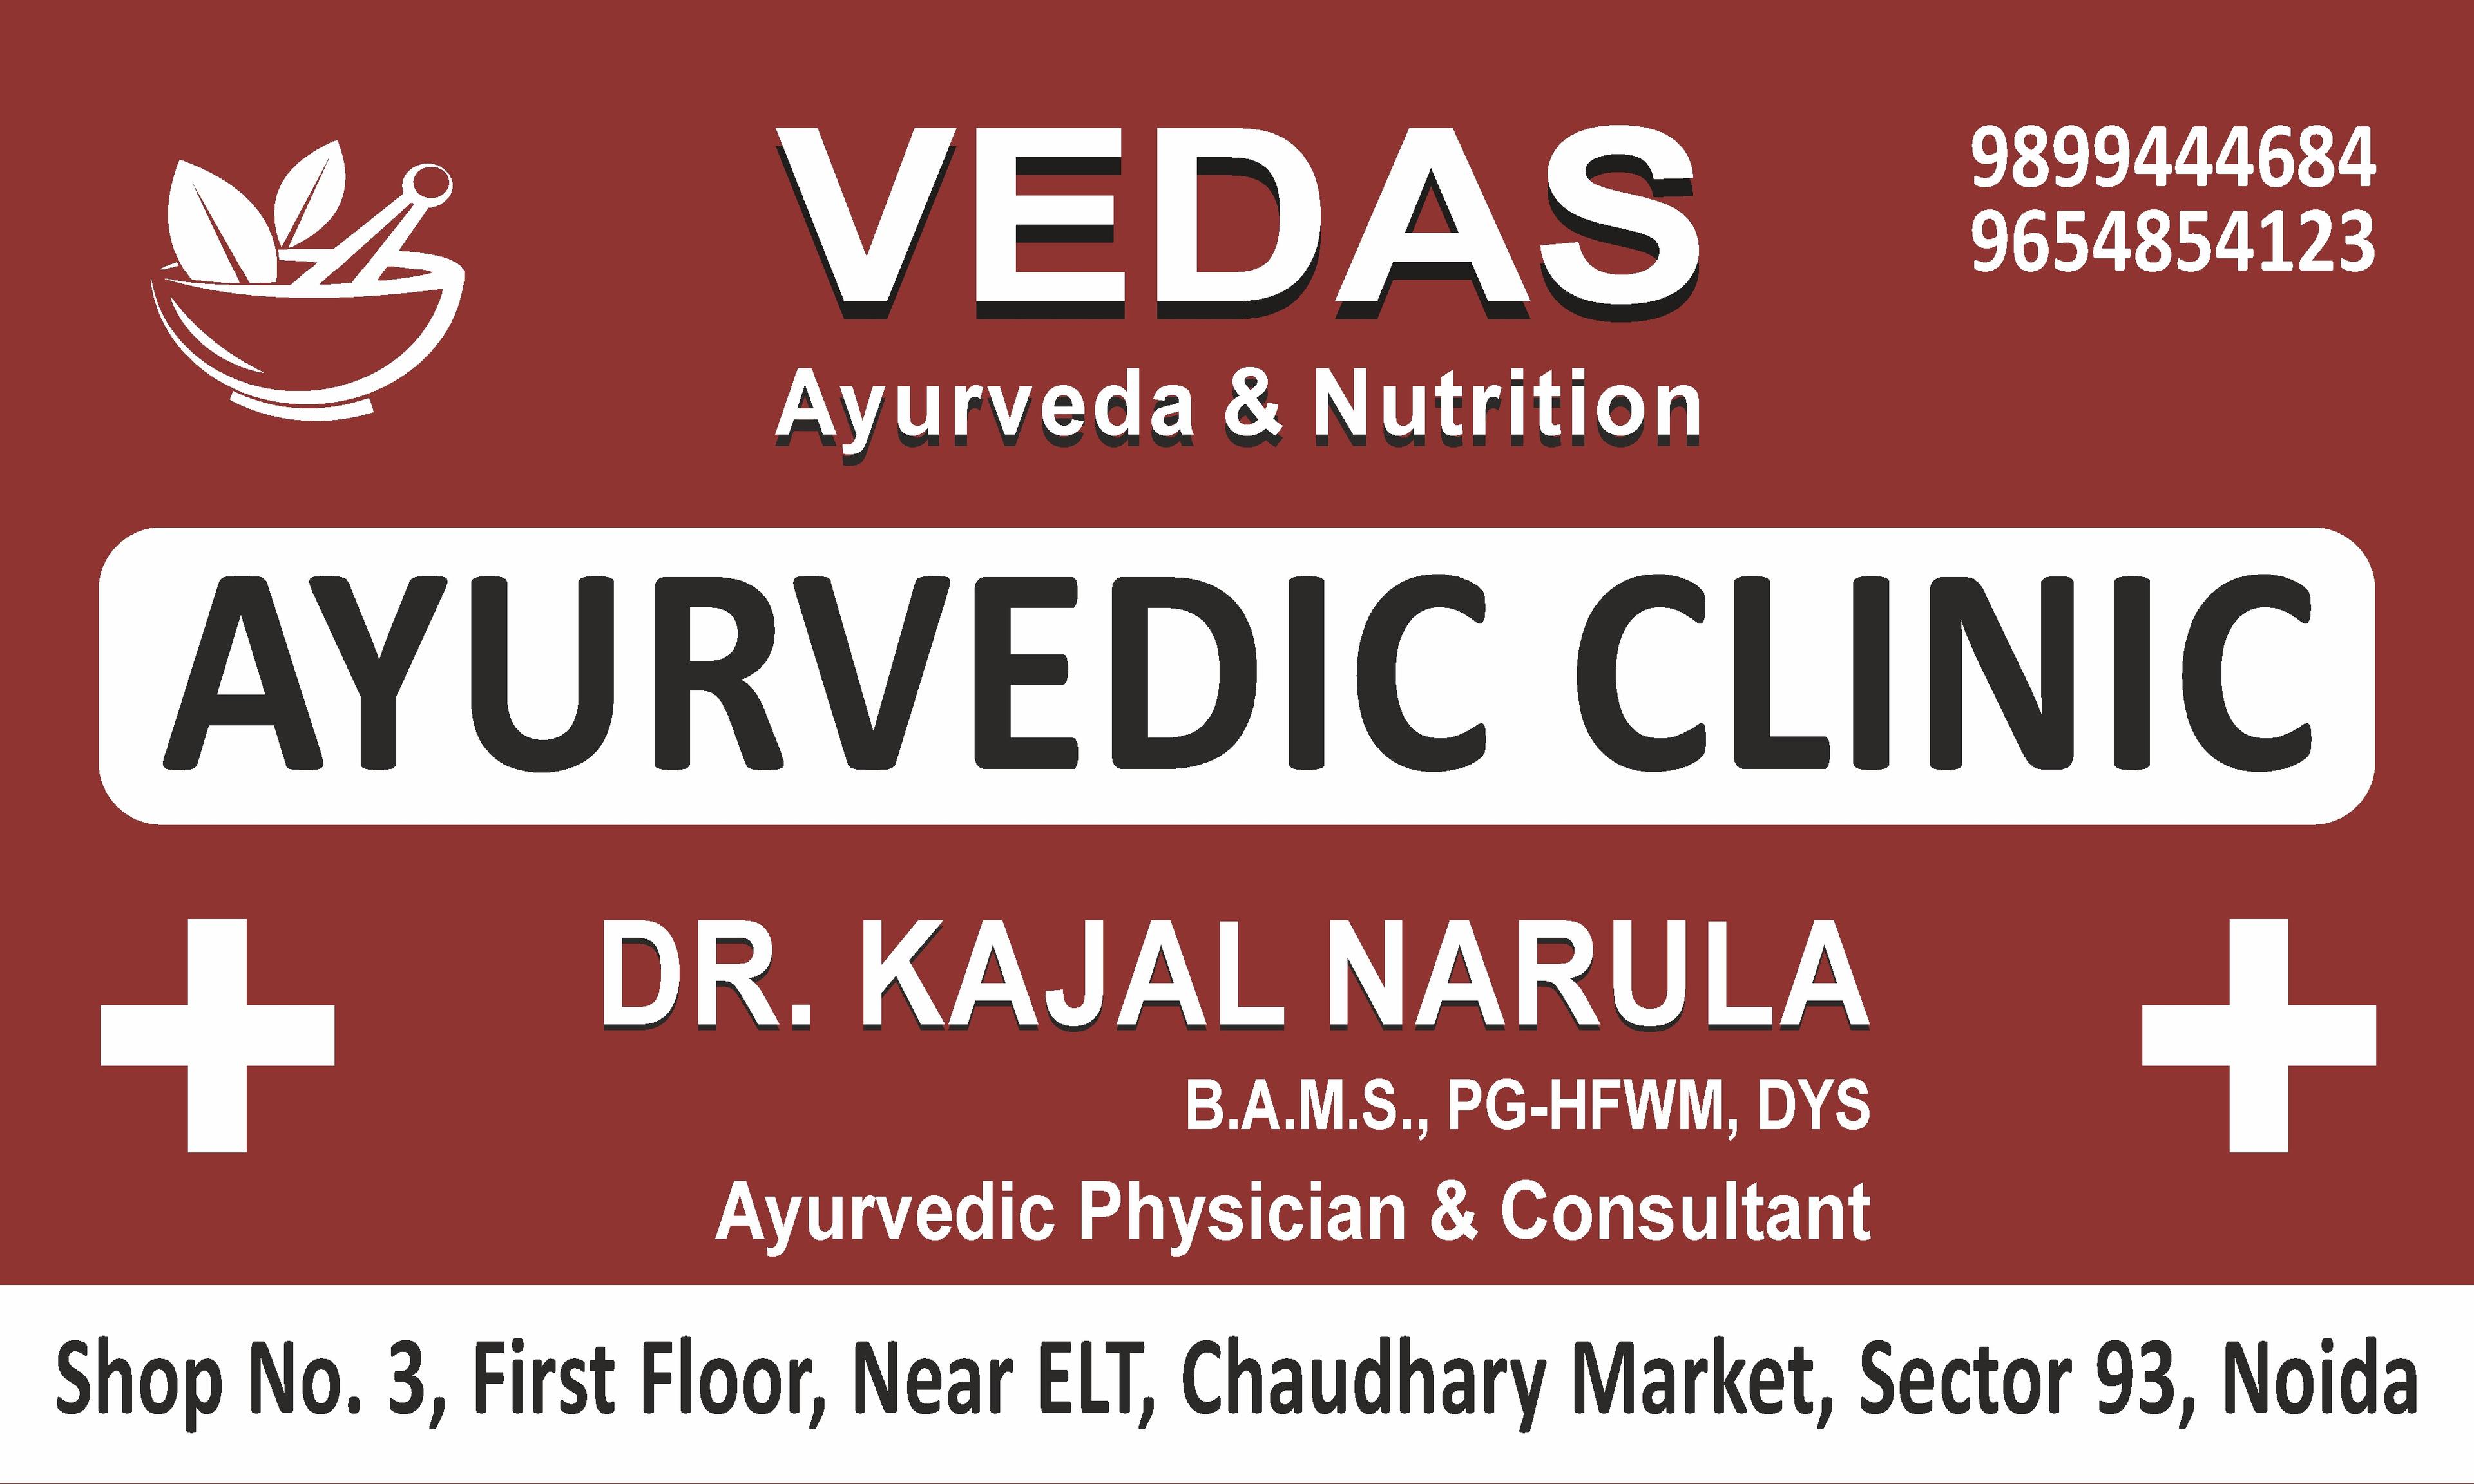 VEDAS-Ayurveda  and  Nutritions